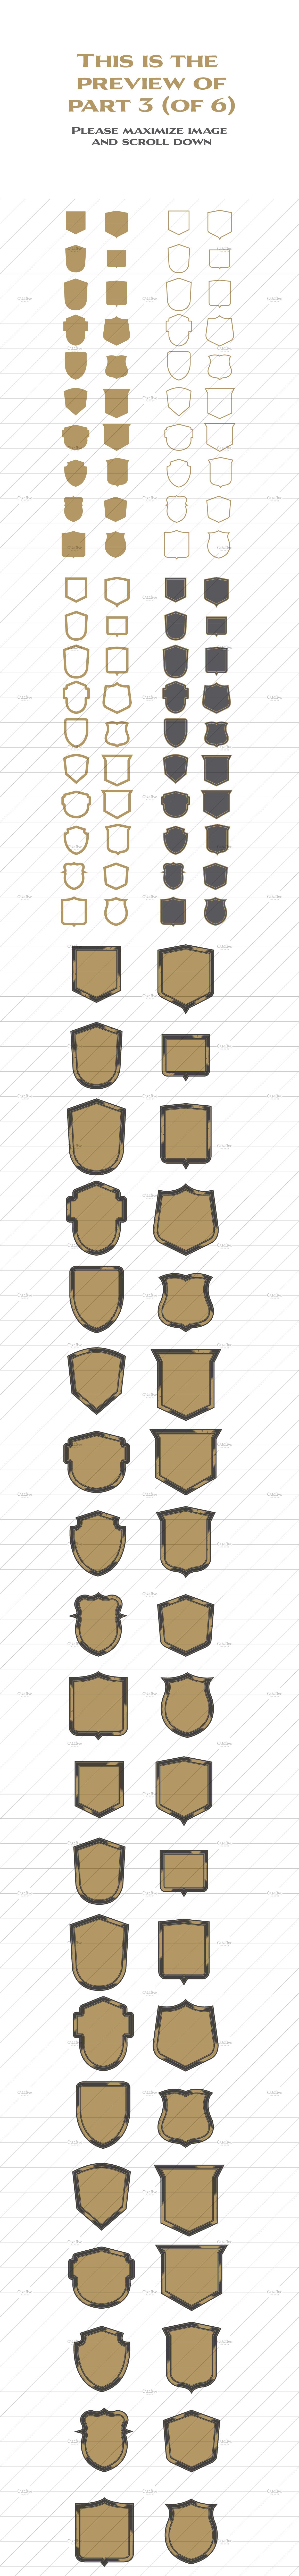 1080 shields shapes vector set base shapes preview part 3 766